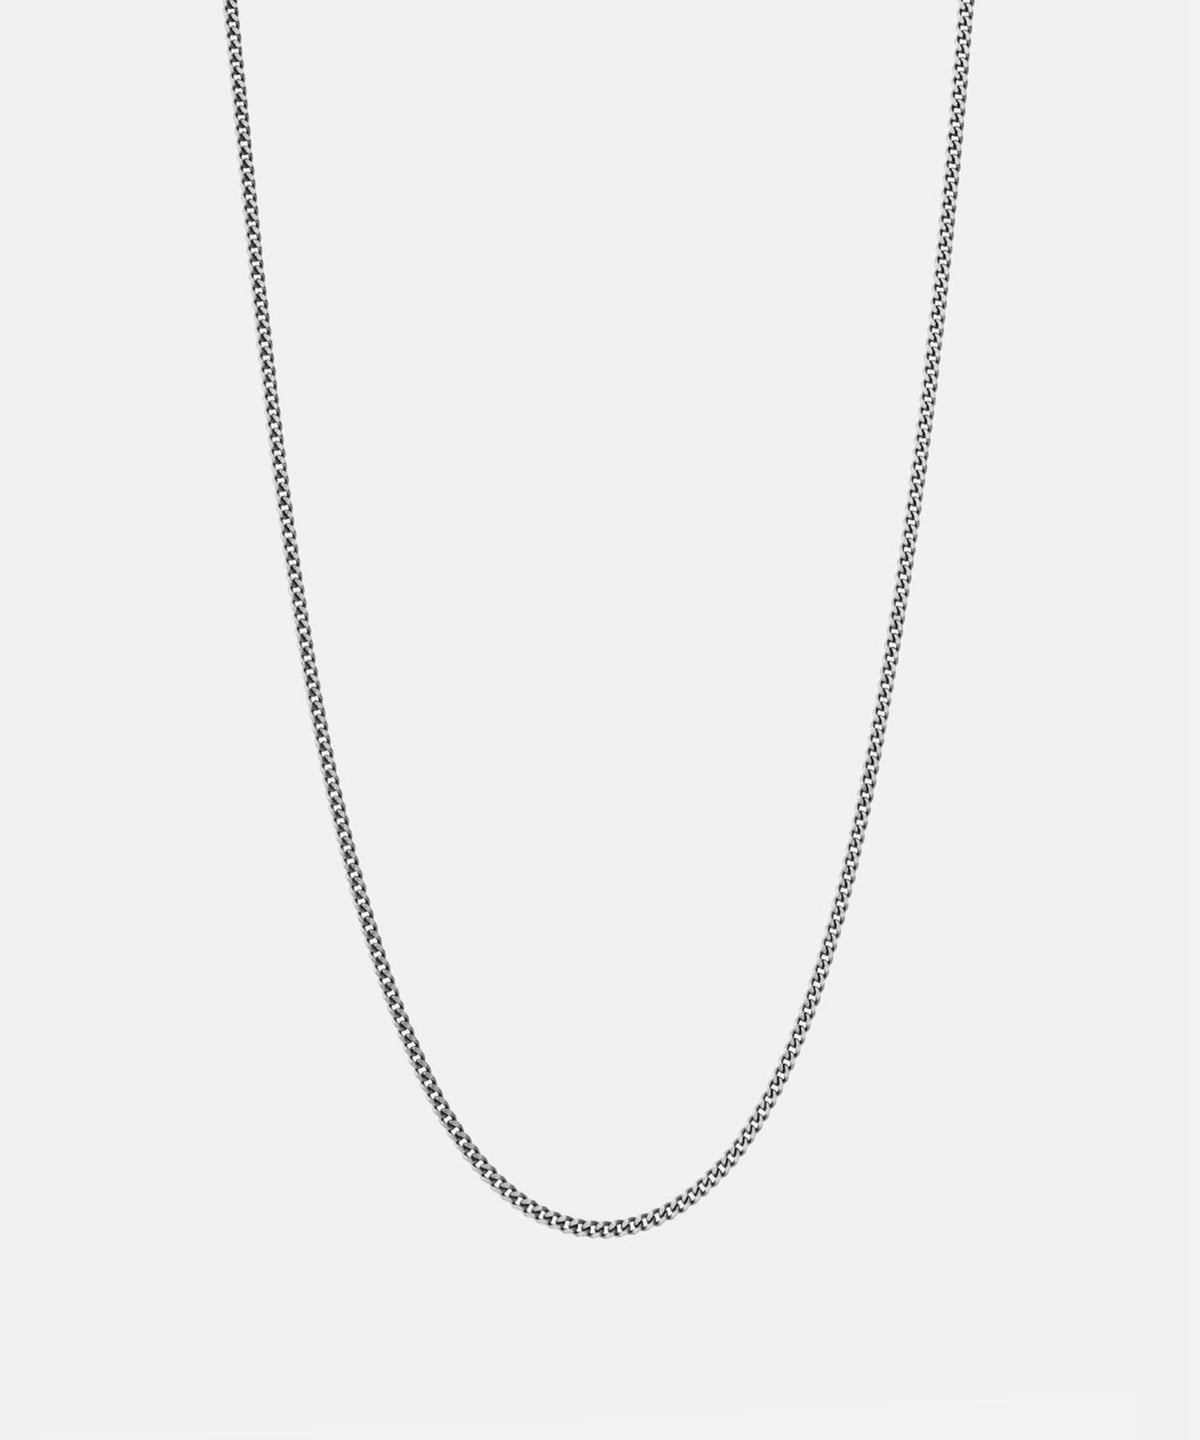 Miansai 2mm Cuban Chain Necklace in Sterling Silver